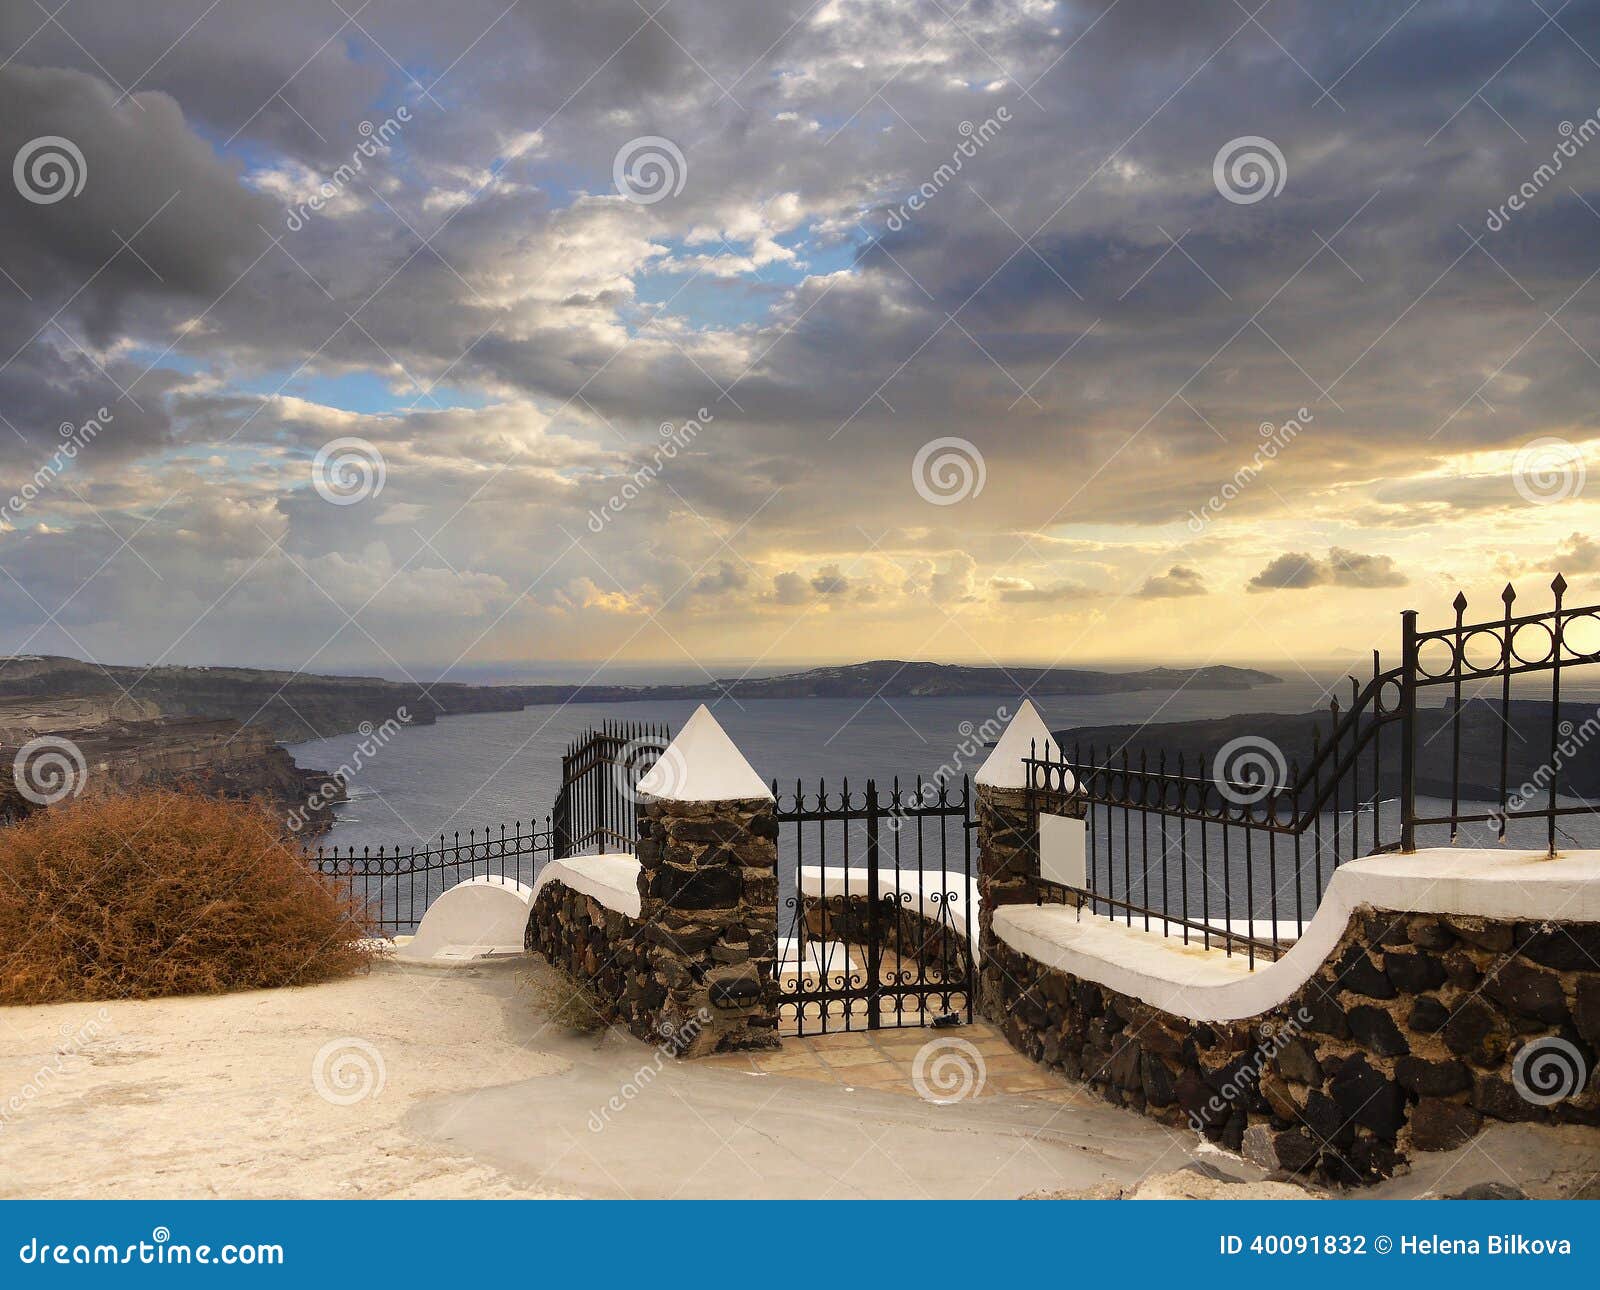 Santorini island Greece stock photo. Image of clouds - 40091832